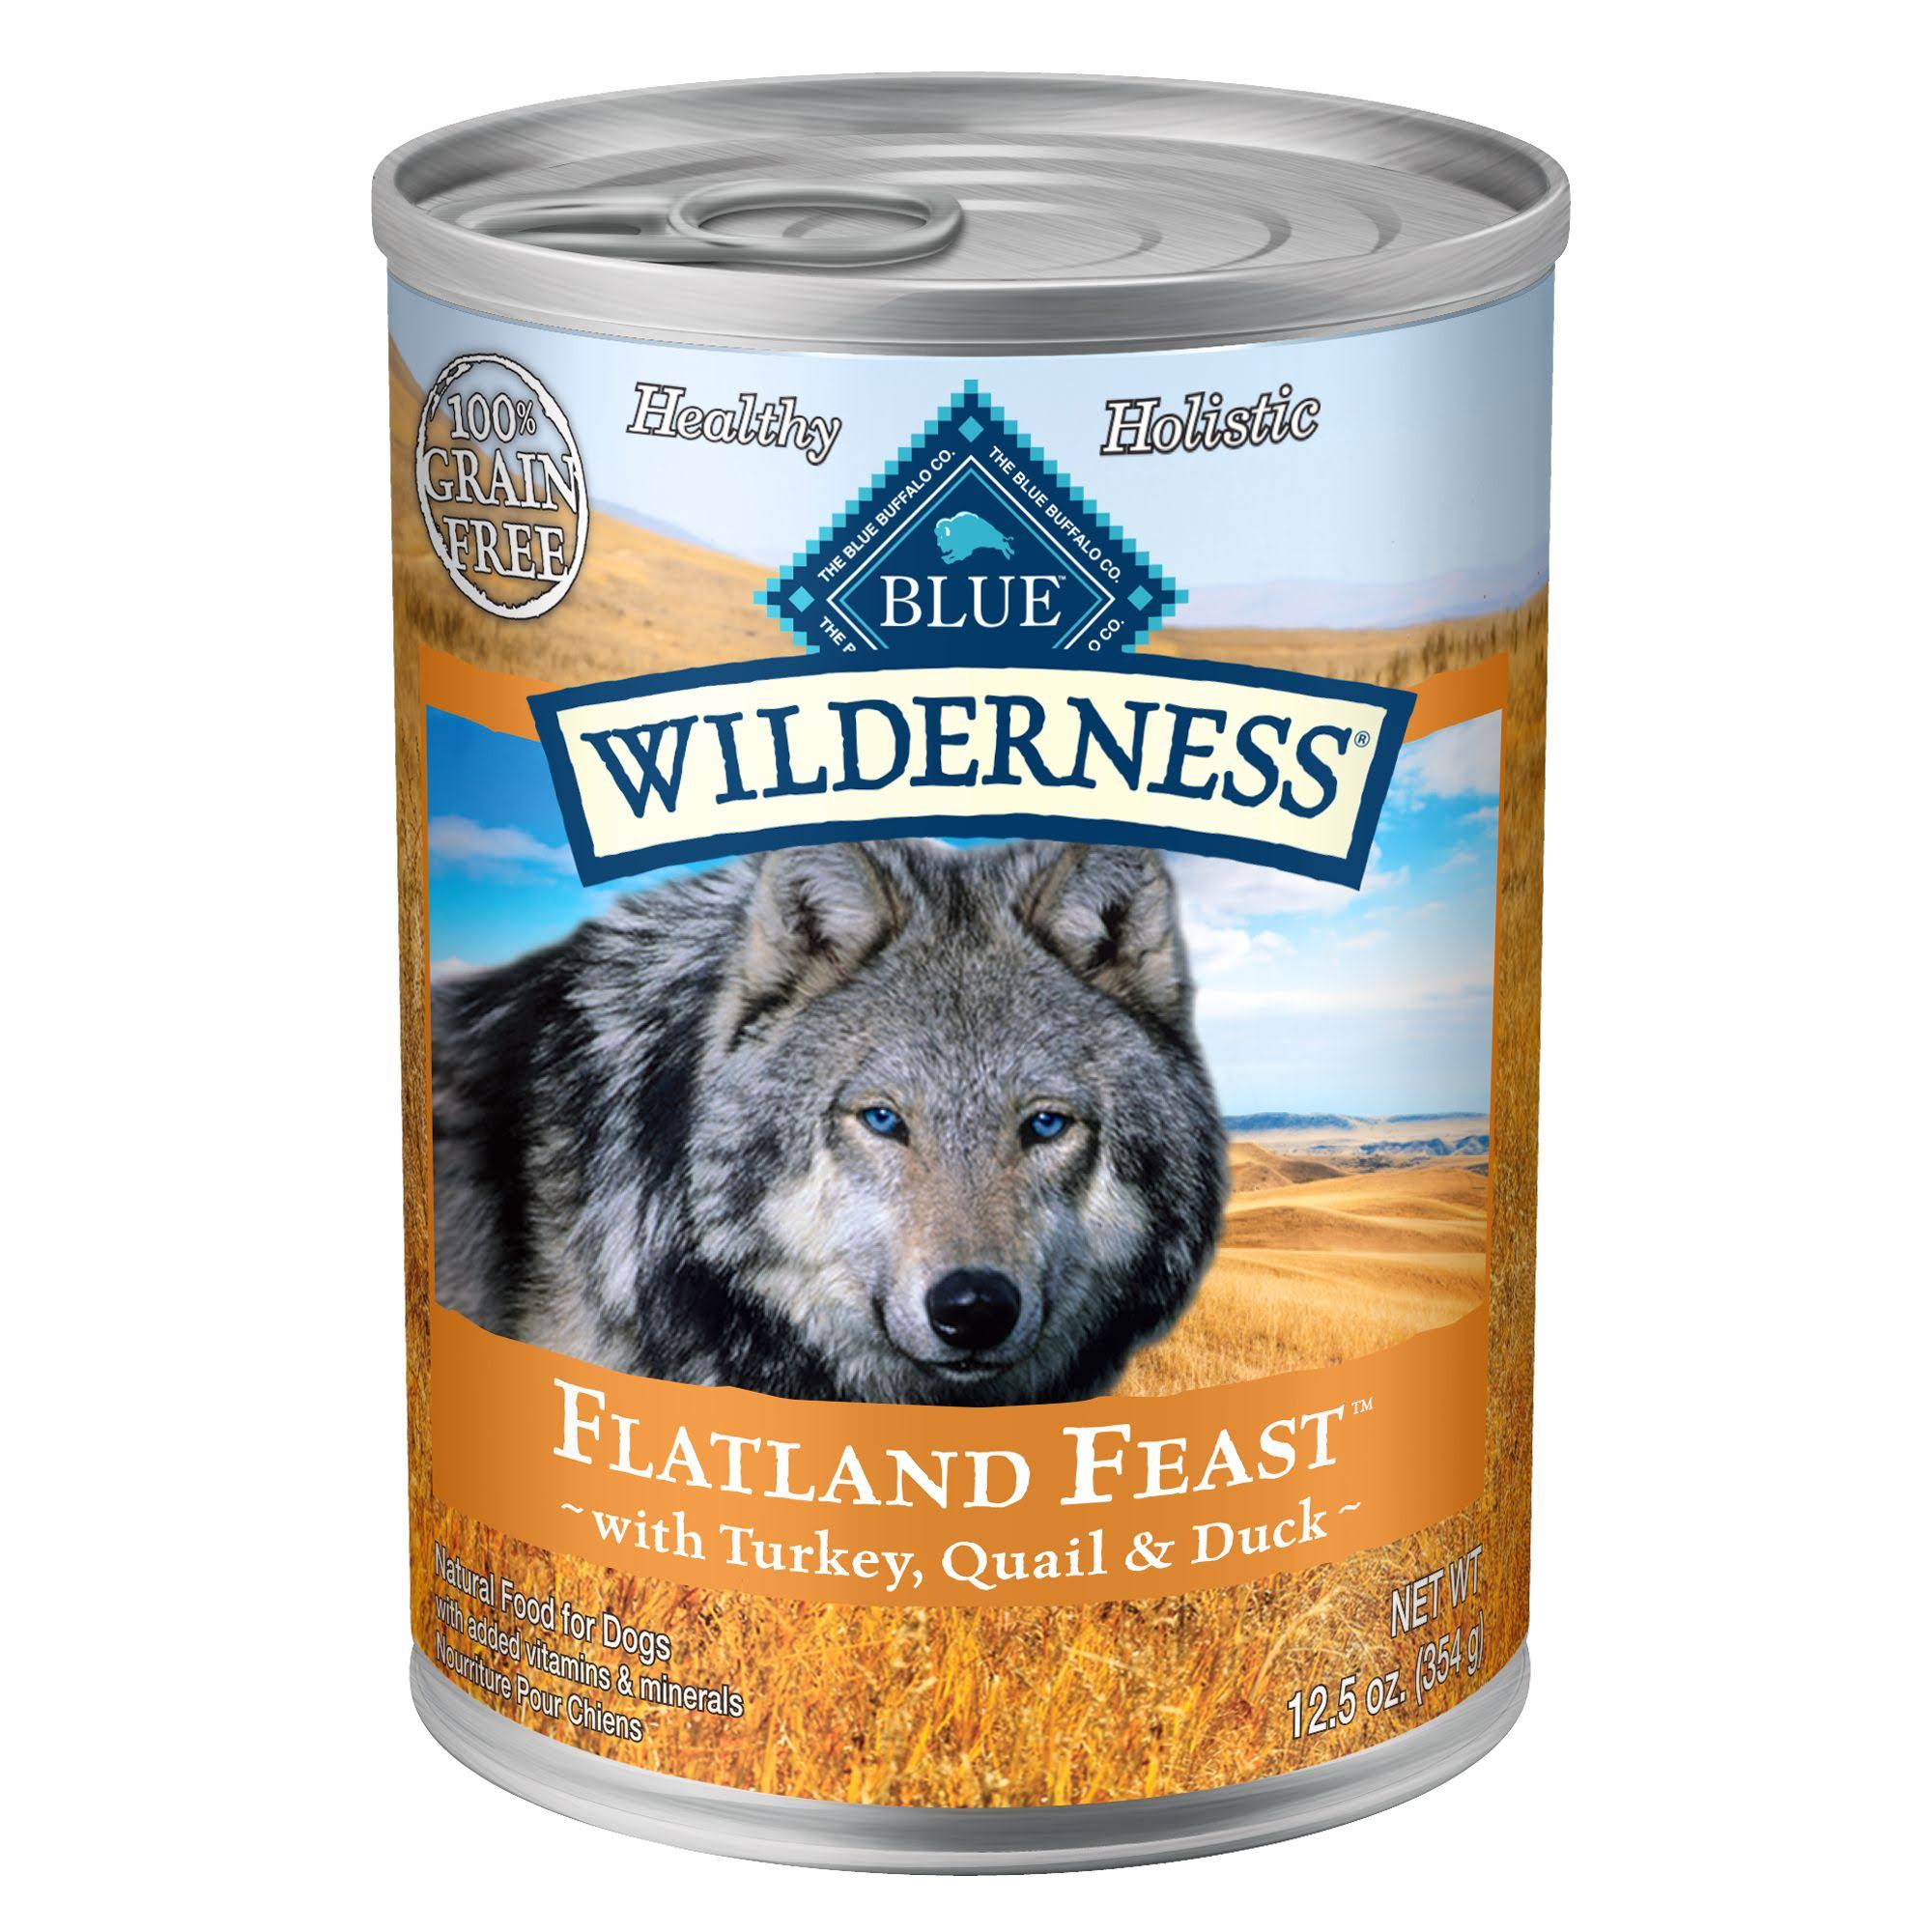 Blue Wilderness Food for Dogs, Flatland Feast - 12.5 oz